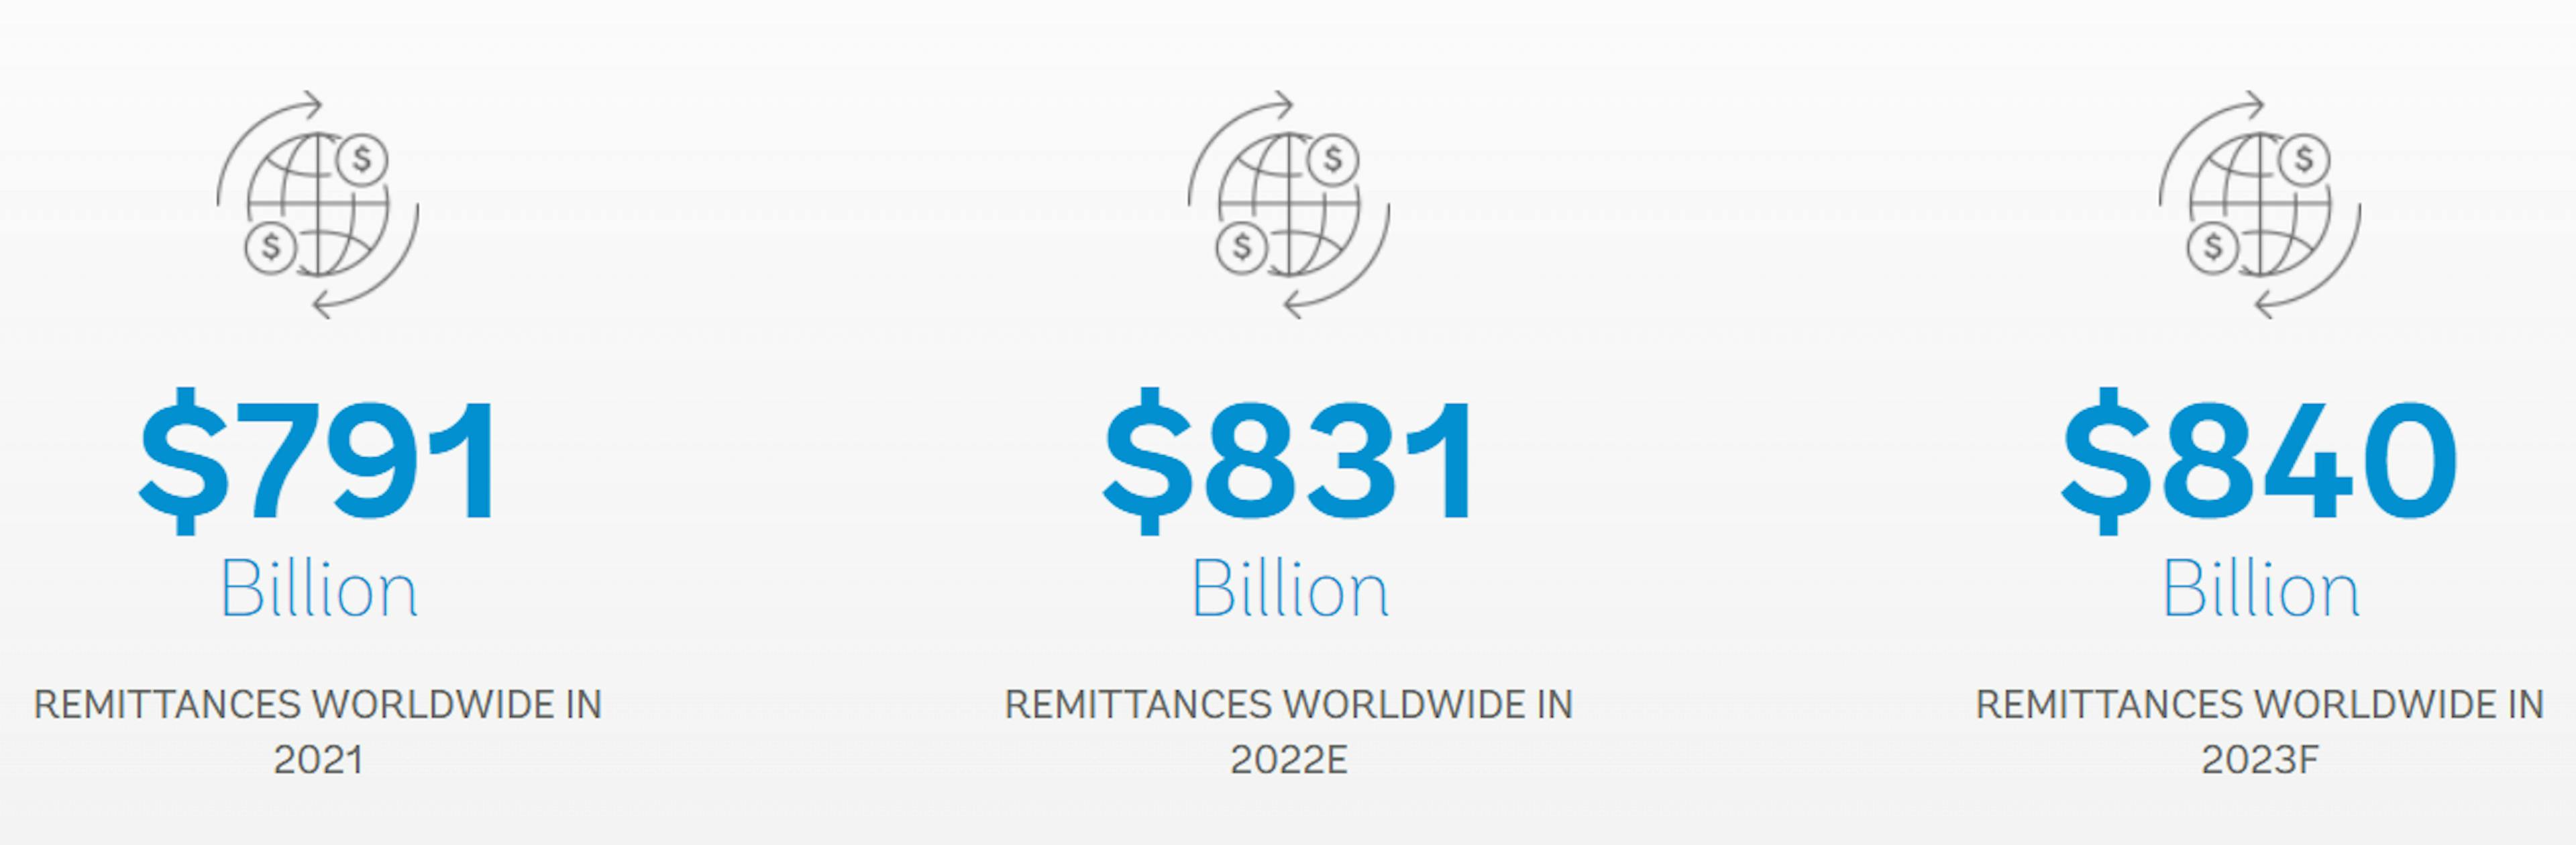 Image: Data for Remittances Worldwide